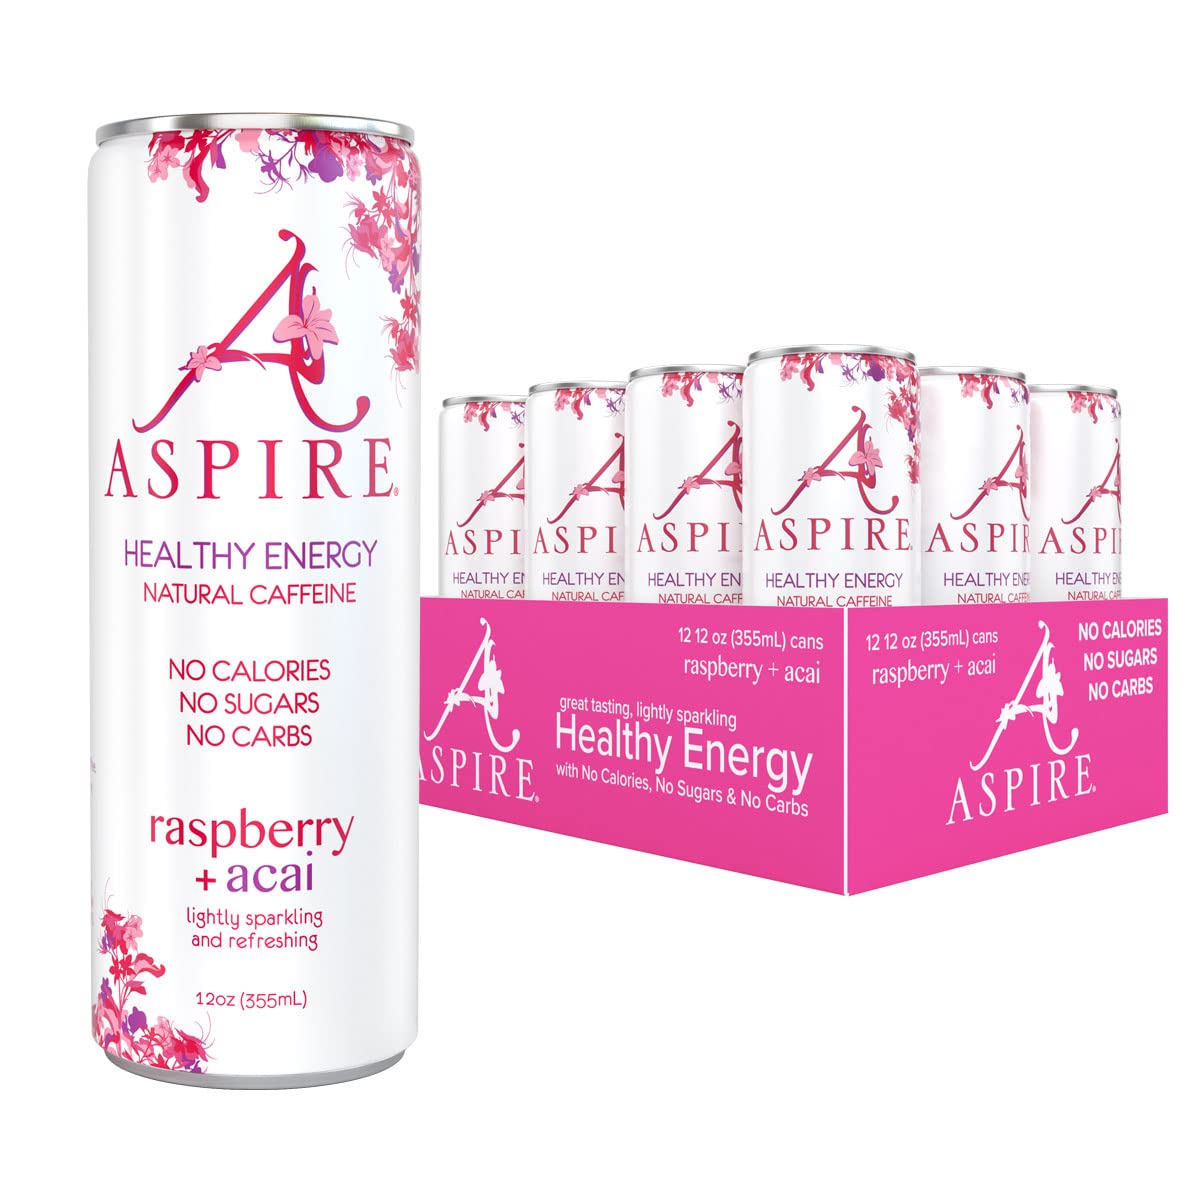 Aspire Healthy Energy, Raspberry Acai, Sugar Free Energy Drink,12 oz Cans, 80 mg of Natural Caffeine, Zero Sugar, Sparkling Caffenated Drink, Natur...